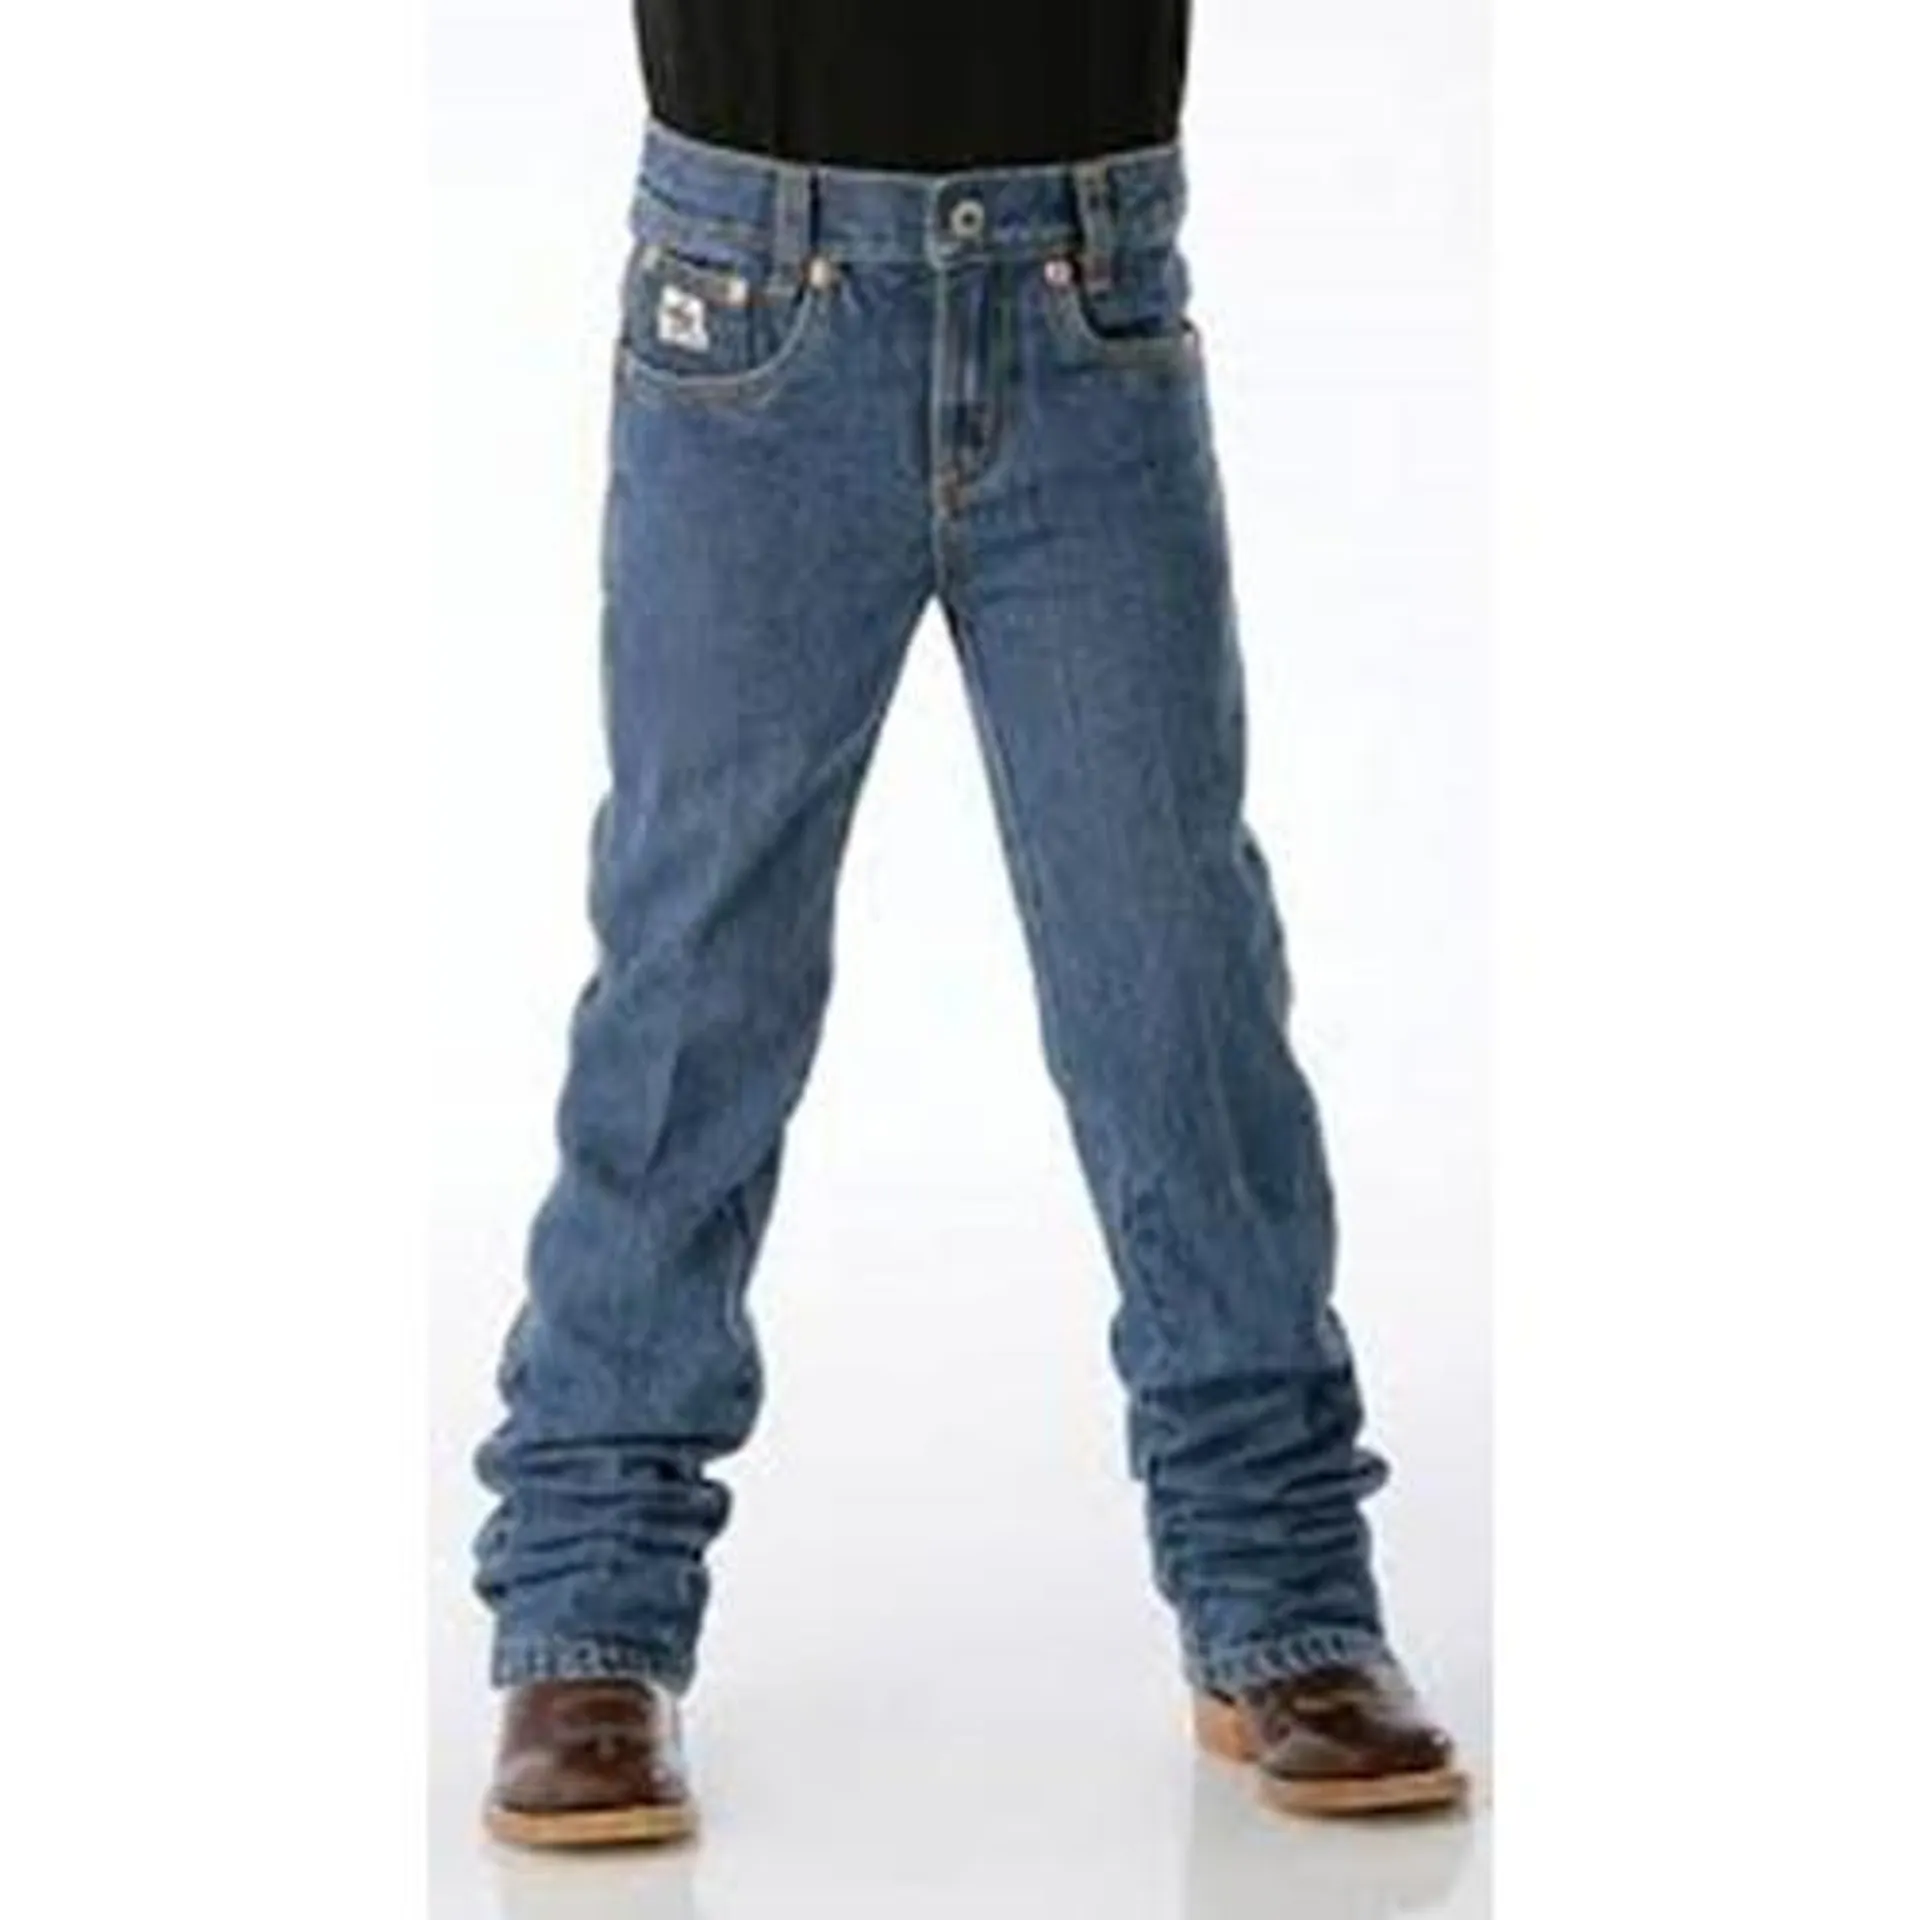 Cinch - Youth Boys Adjustable Original Slim Fit Jeans - Denim